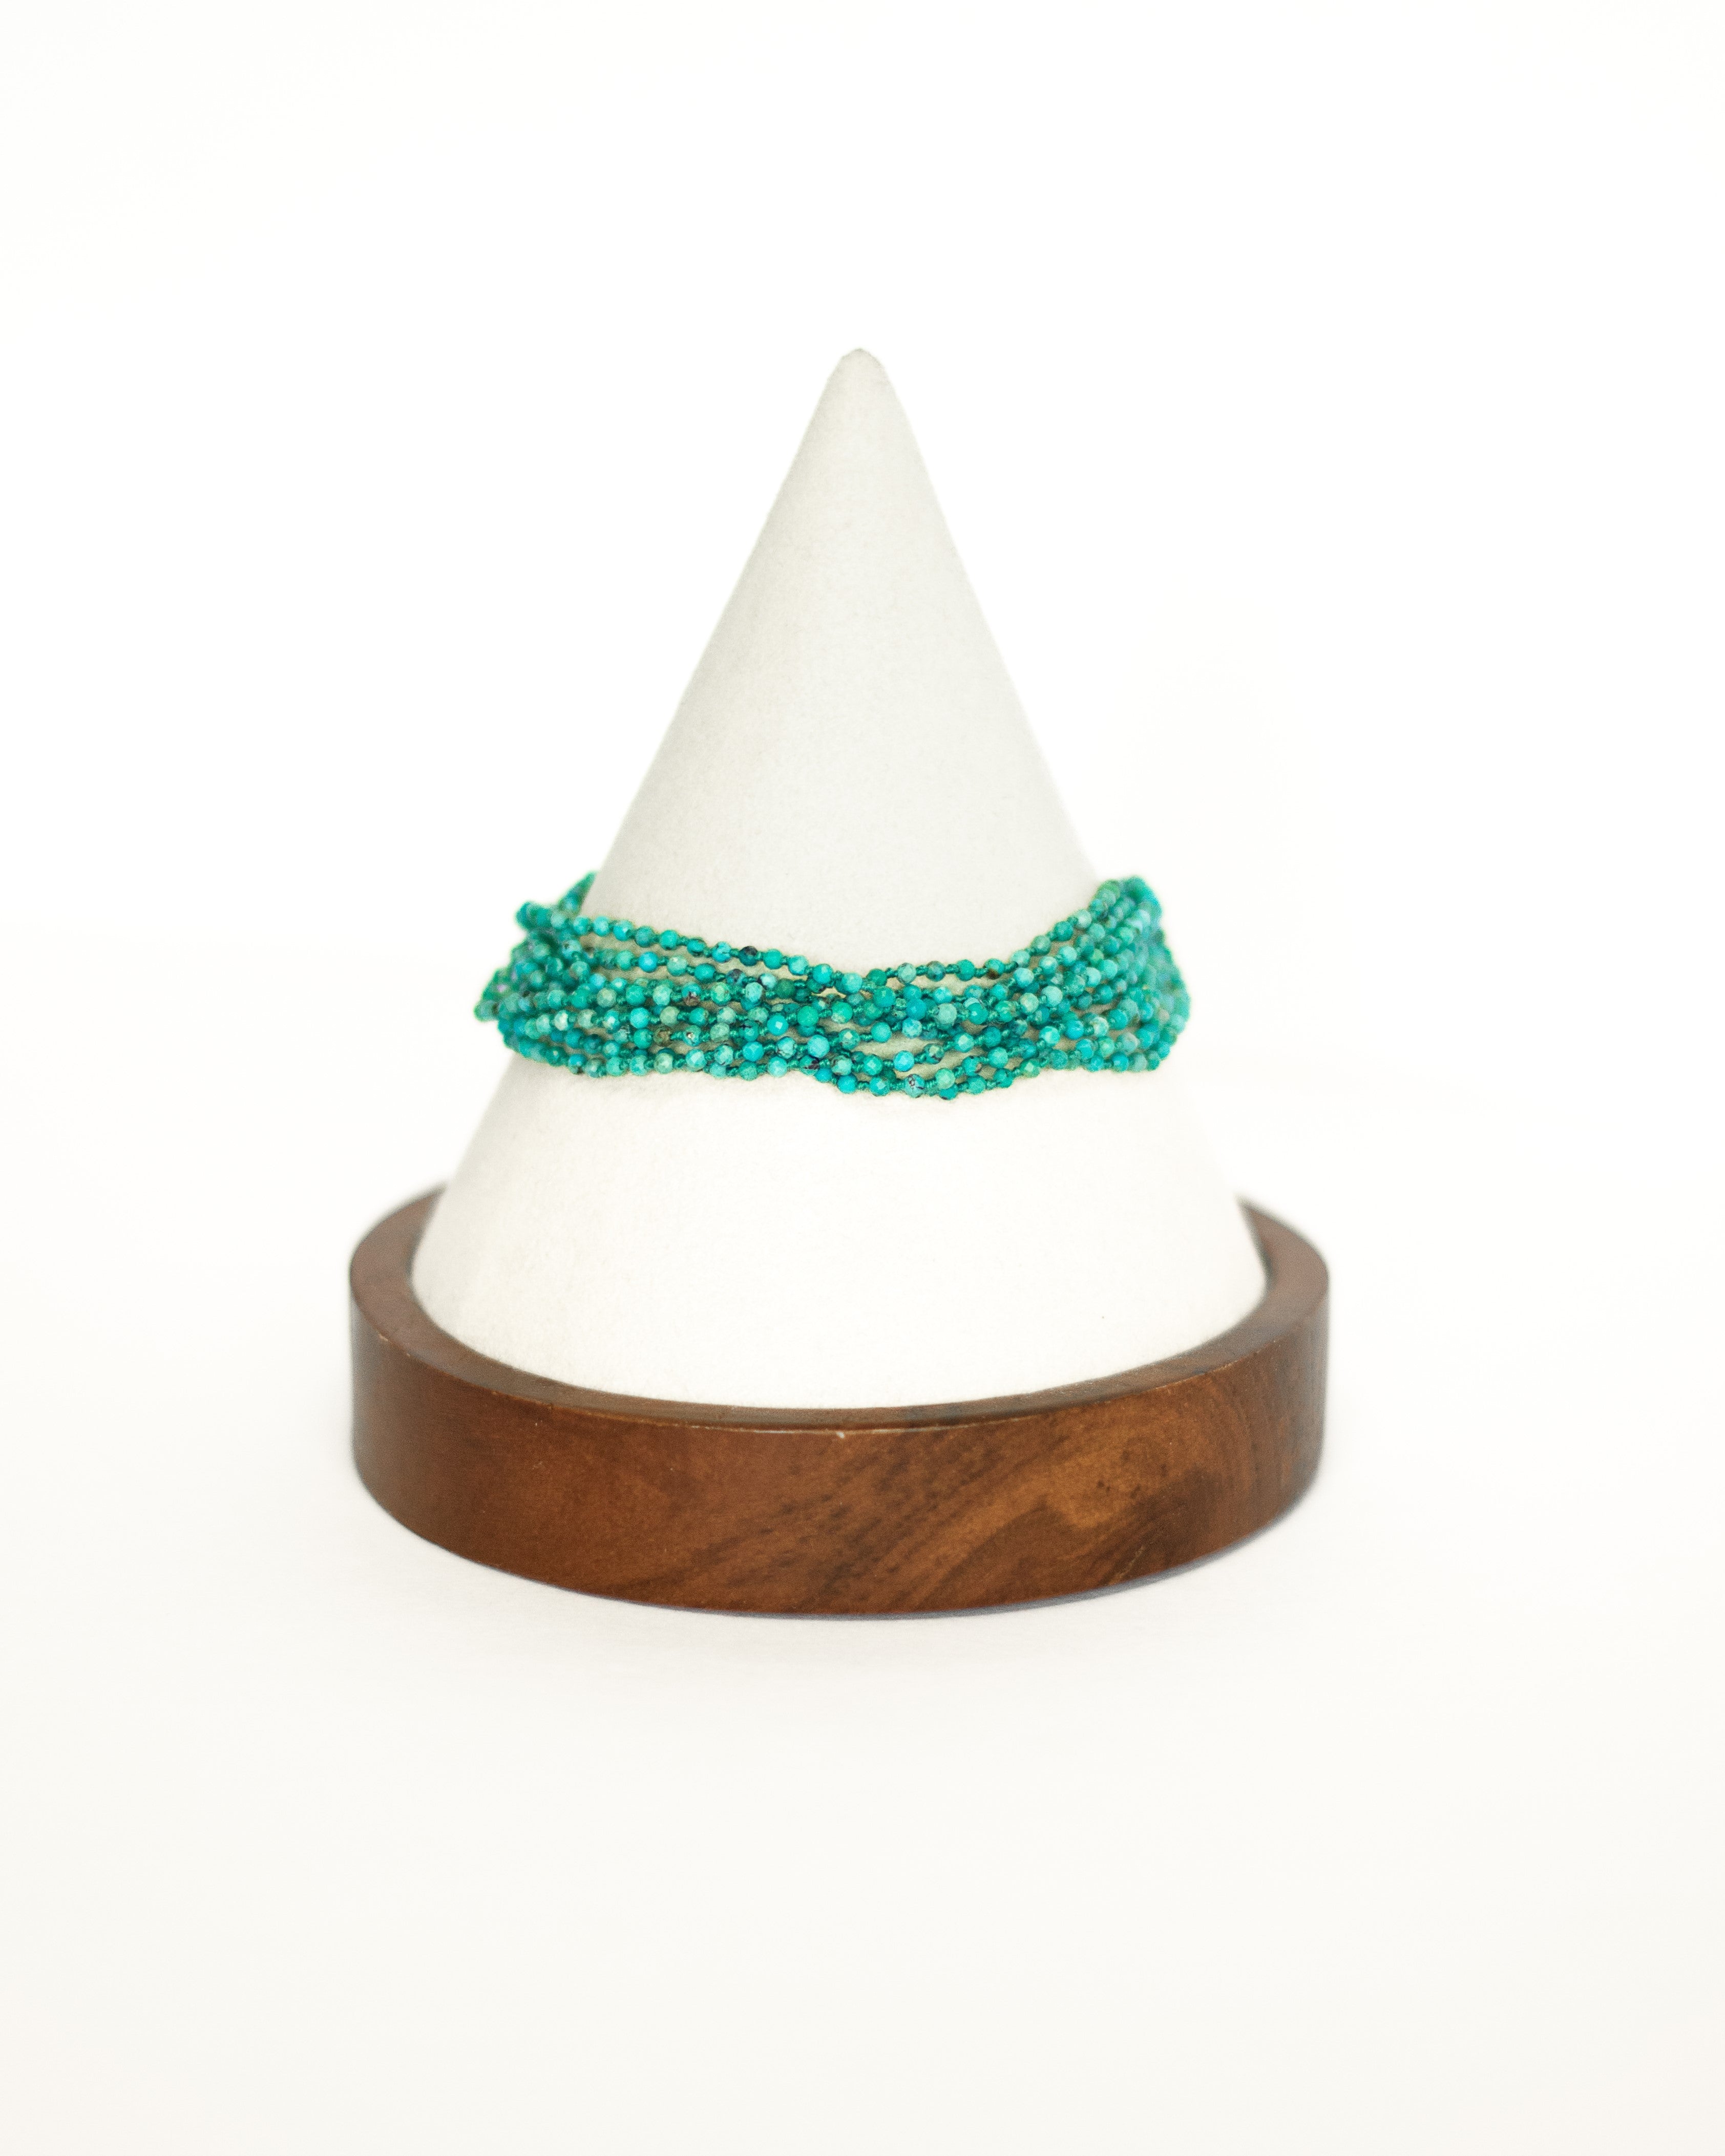 Turquoise 9 Strand Bracelet by Art Of Ceremony